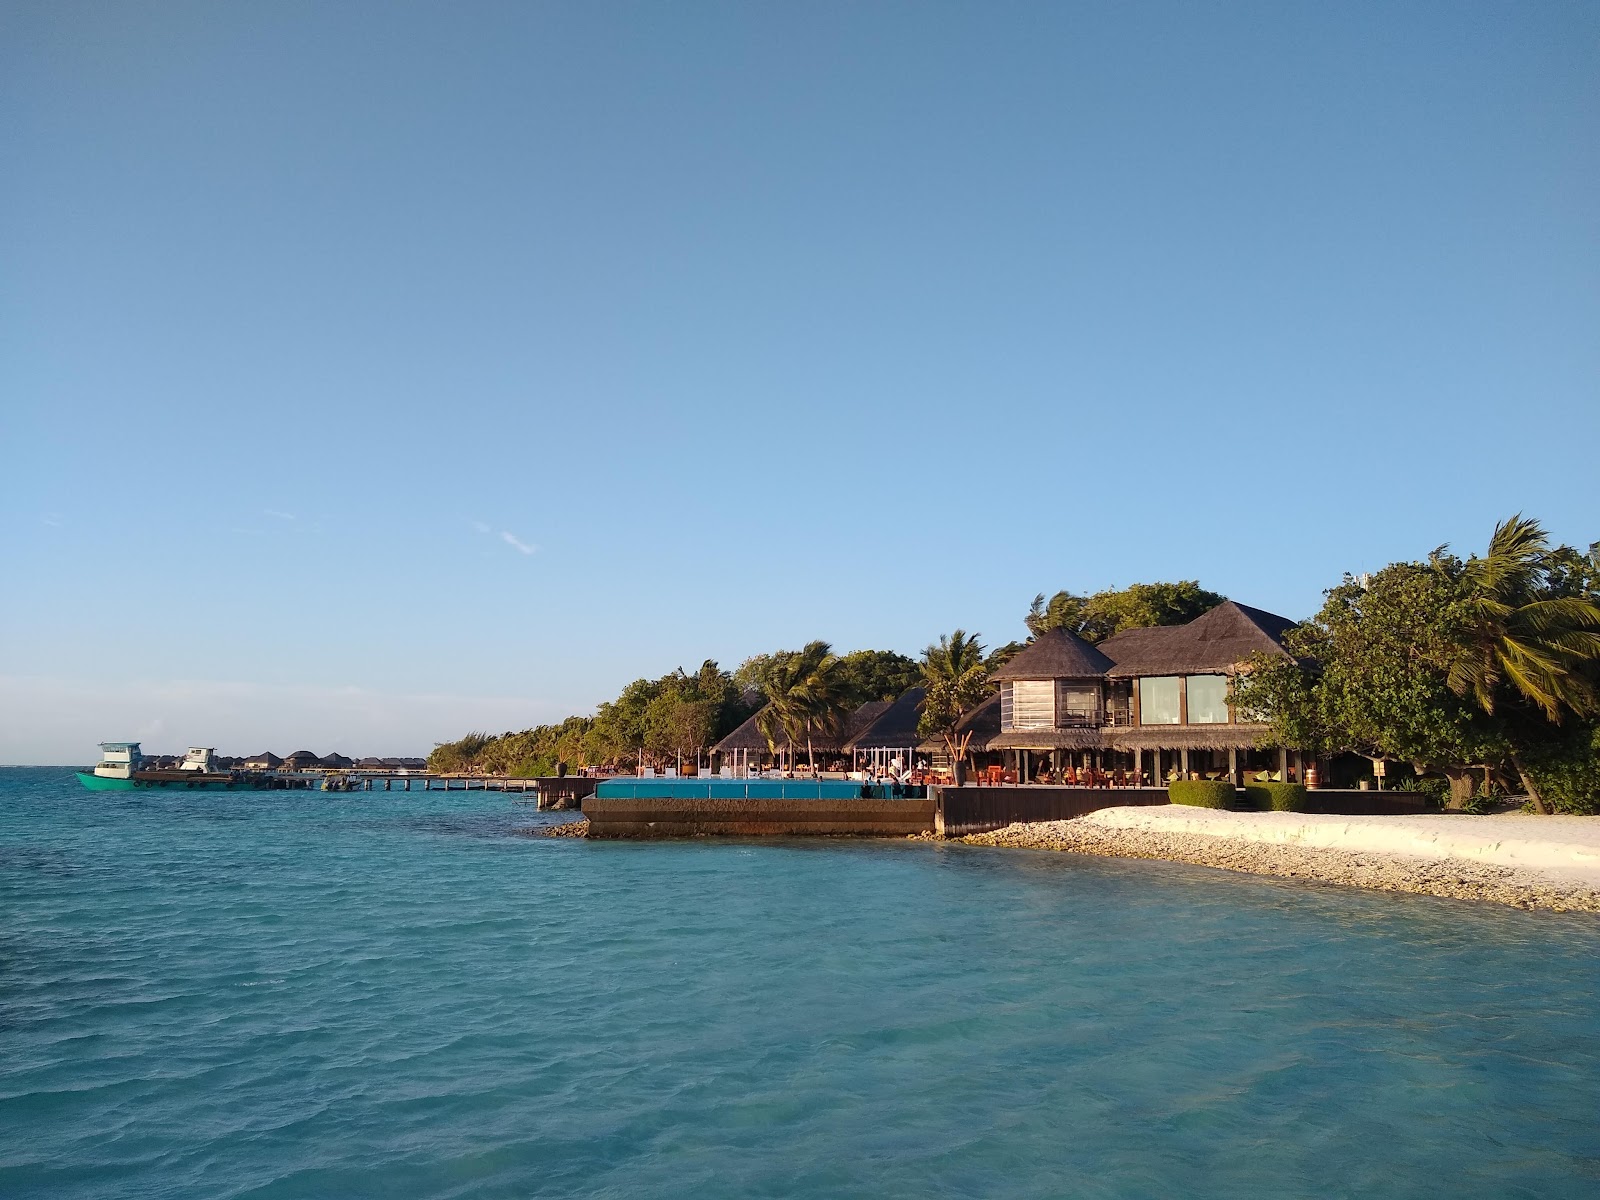 Fotografie cu Coco Bodu Hithi Resort - locul popular printre cunoscătorii de relaxare